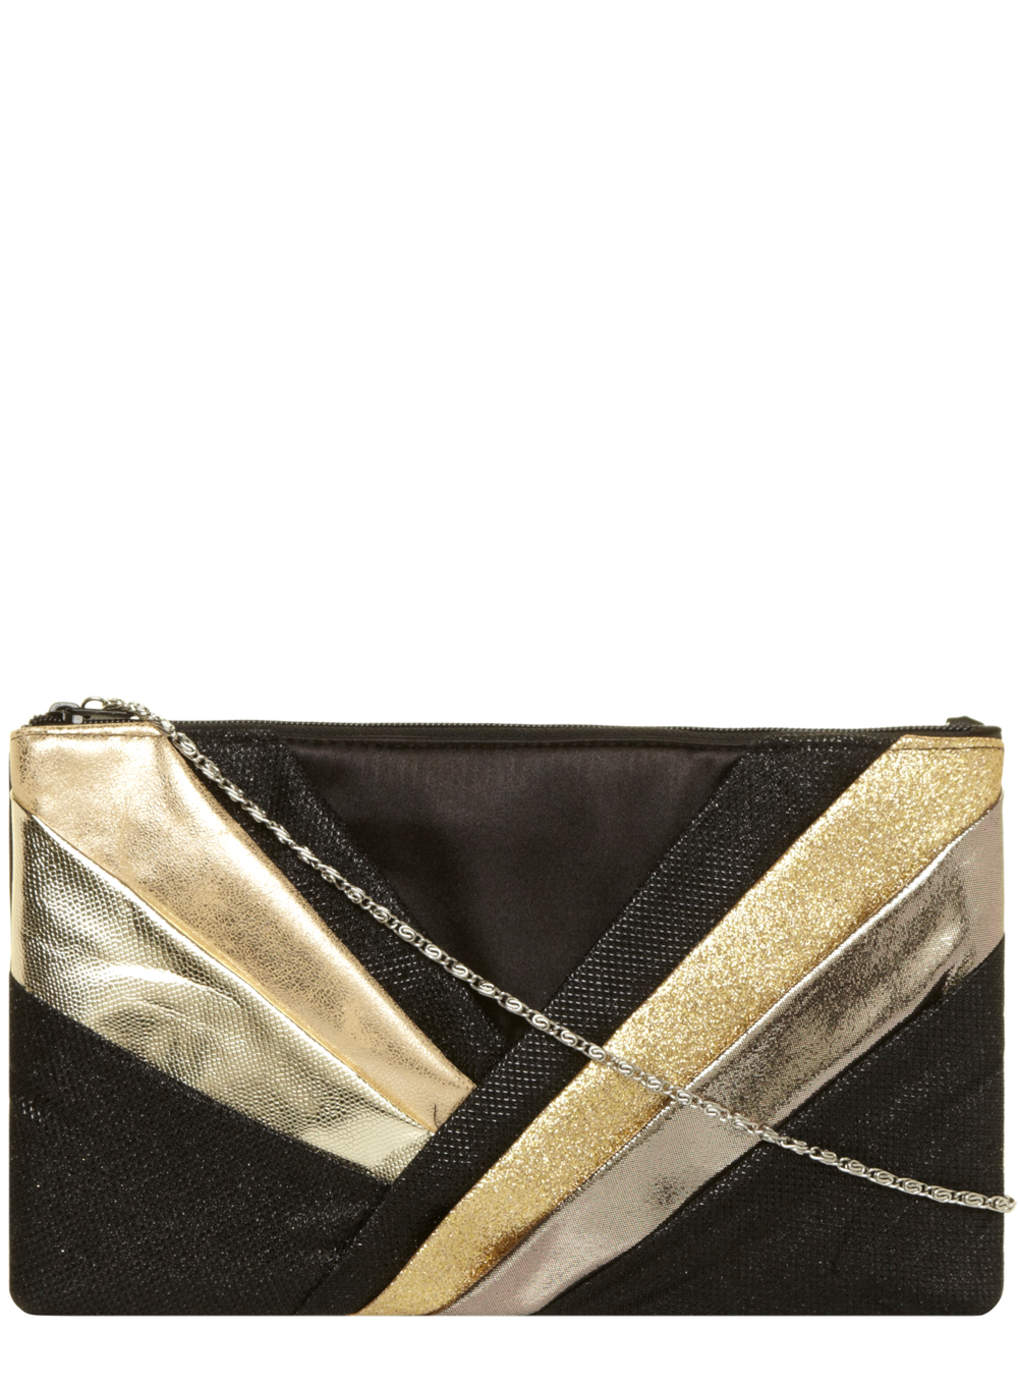 Black and Metallic Layered Clutch Bag 68110001